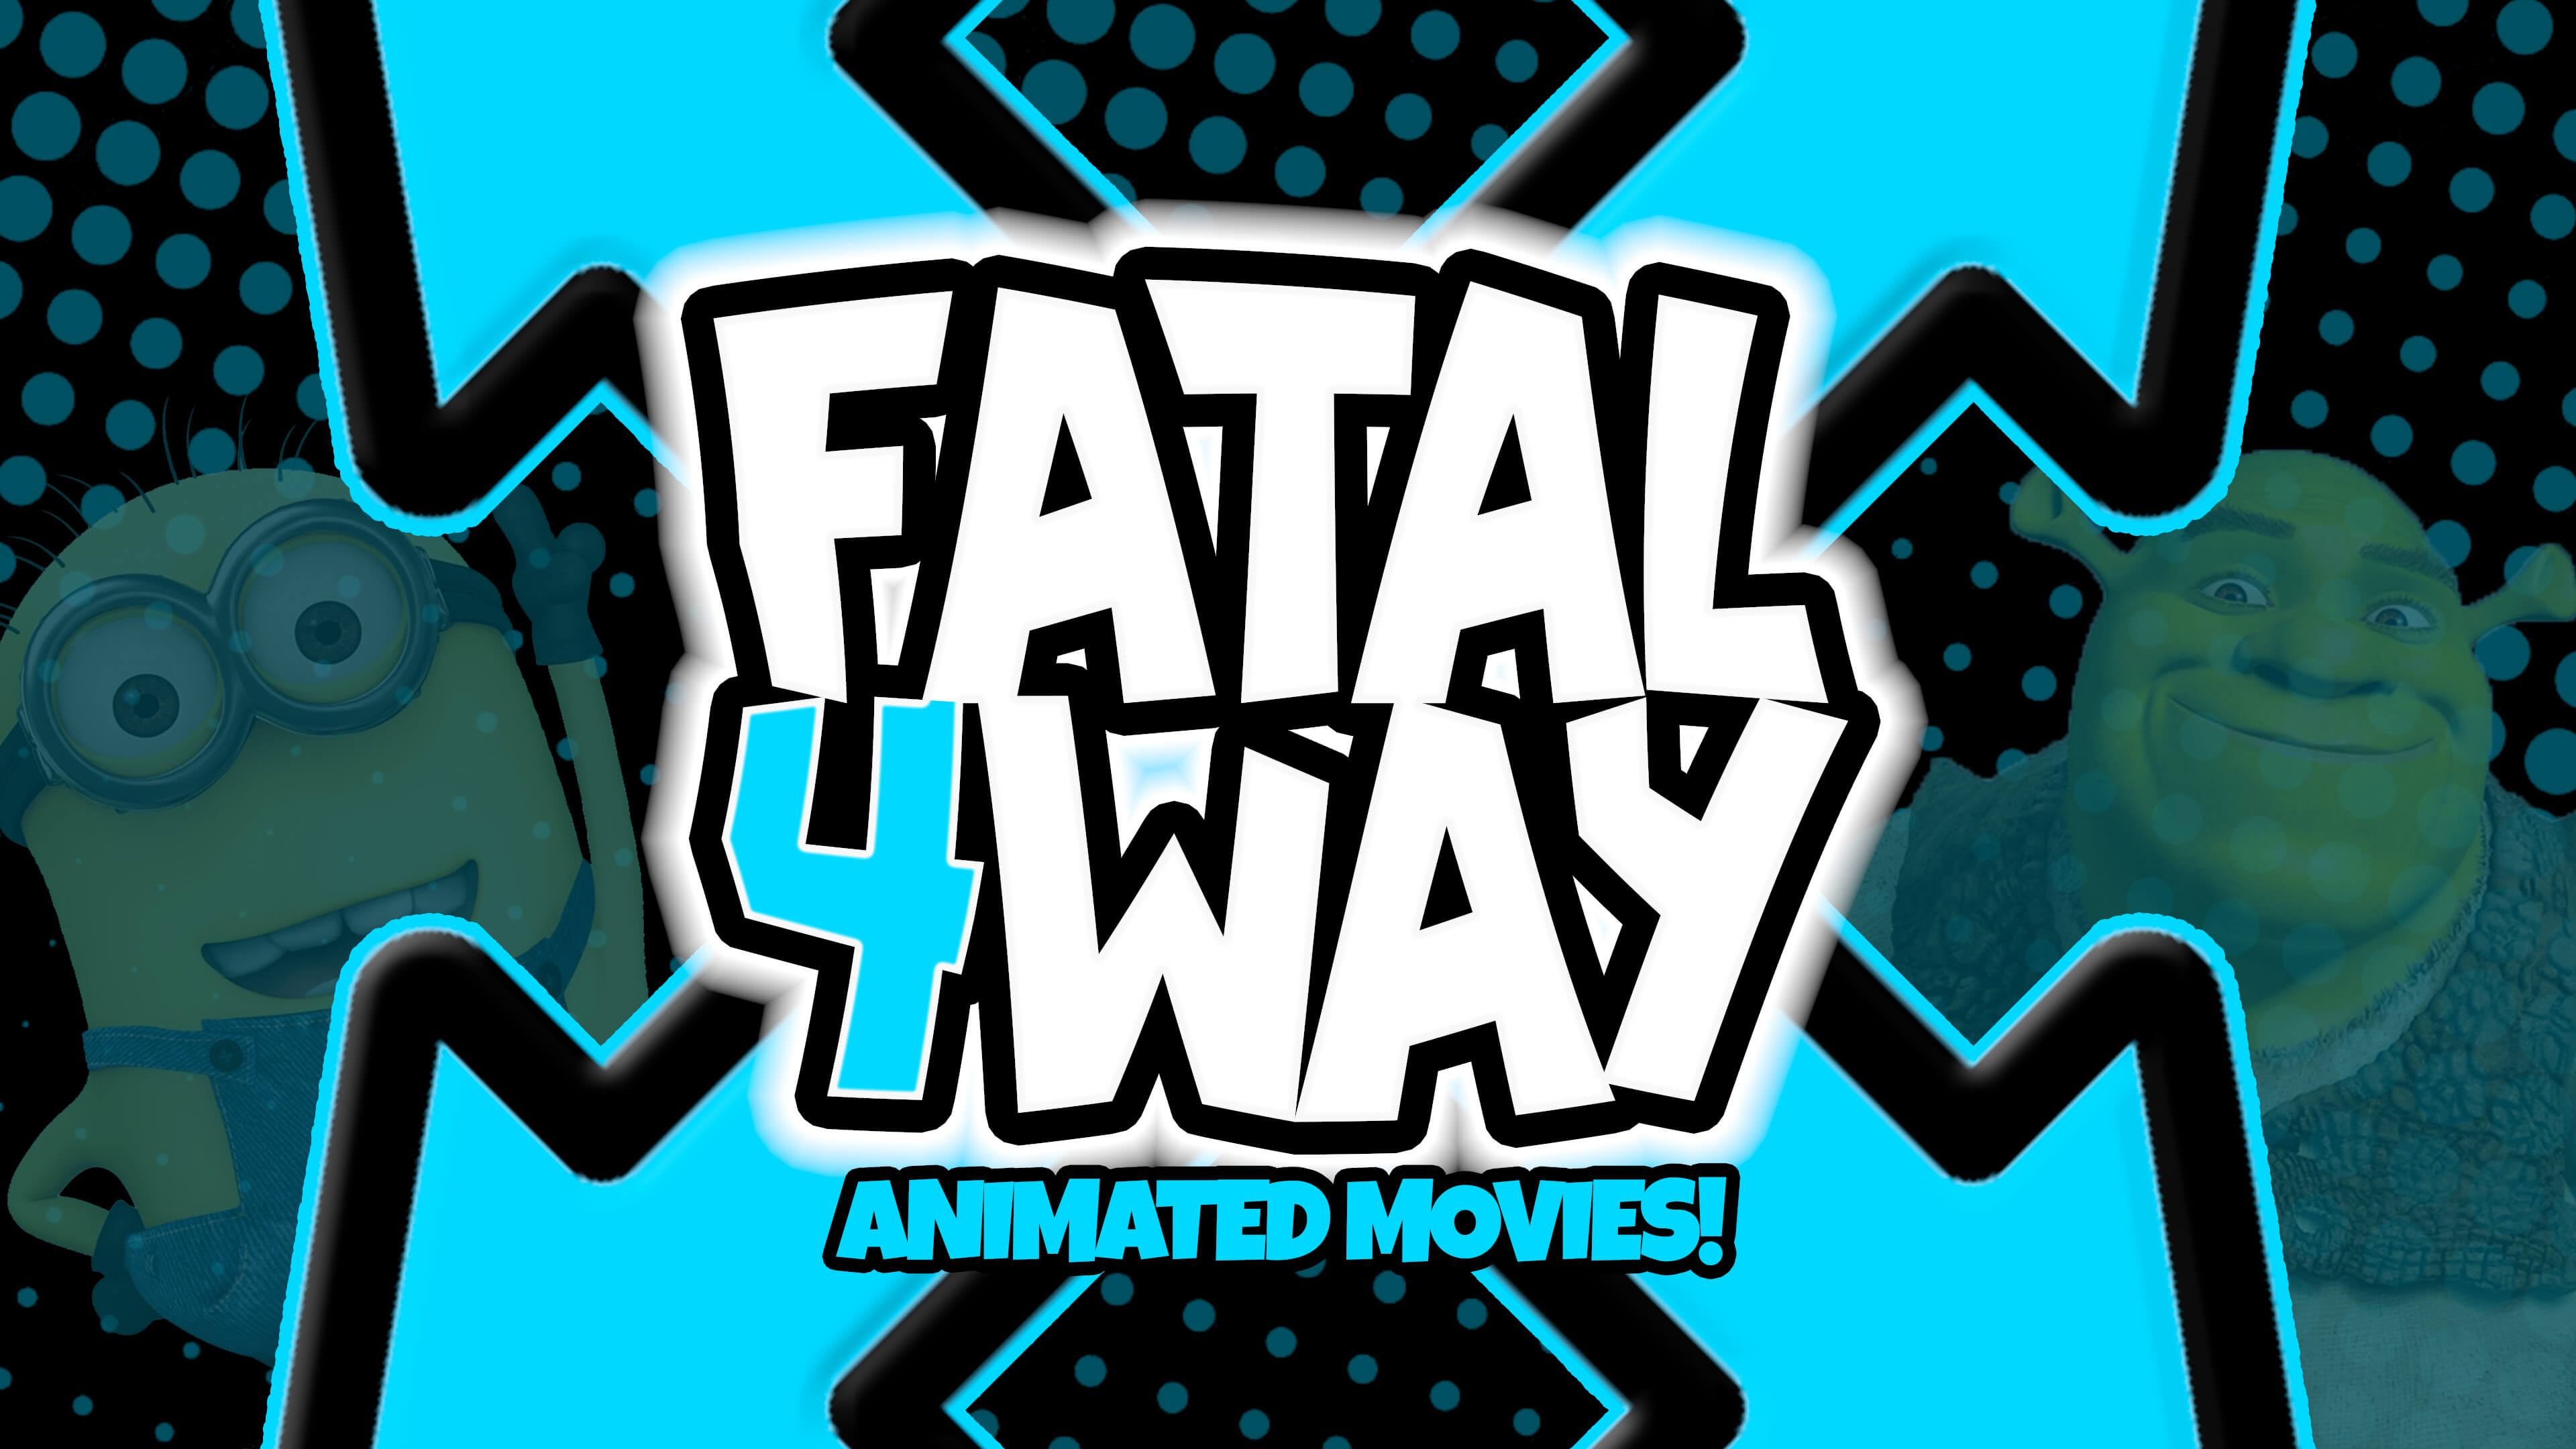 Fatal 4 Way: Animated Movies